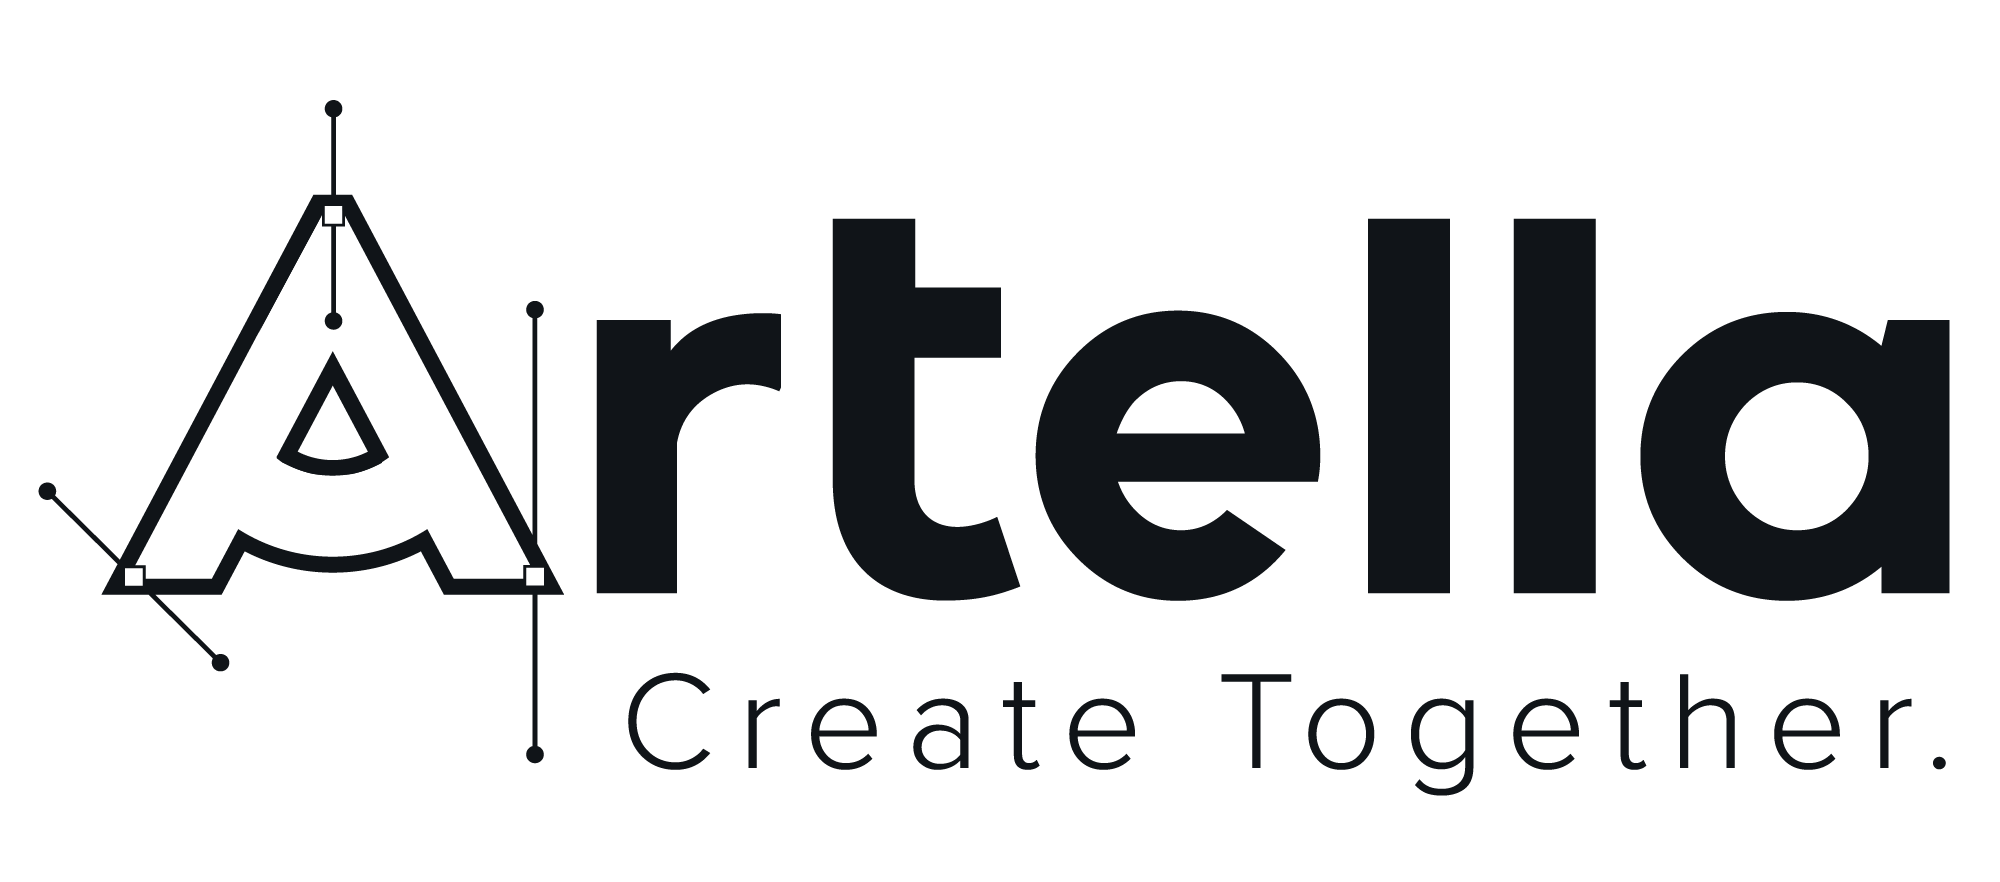 Artella Logo